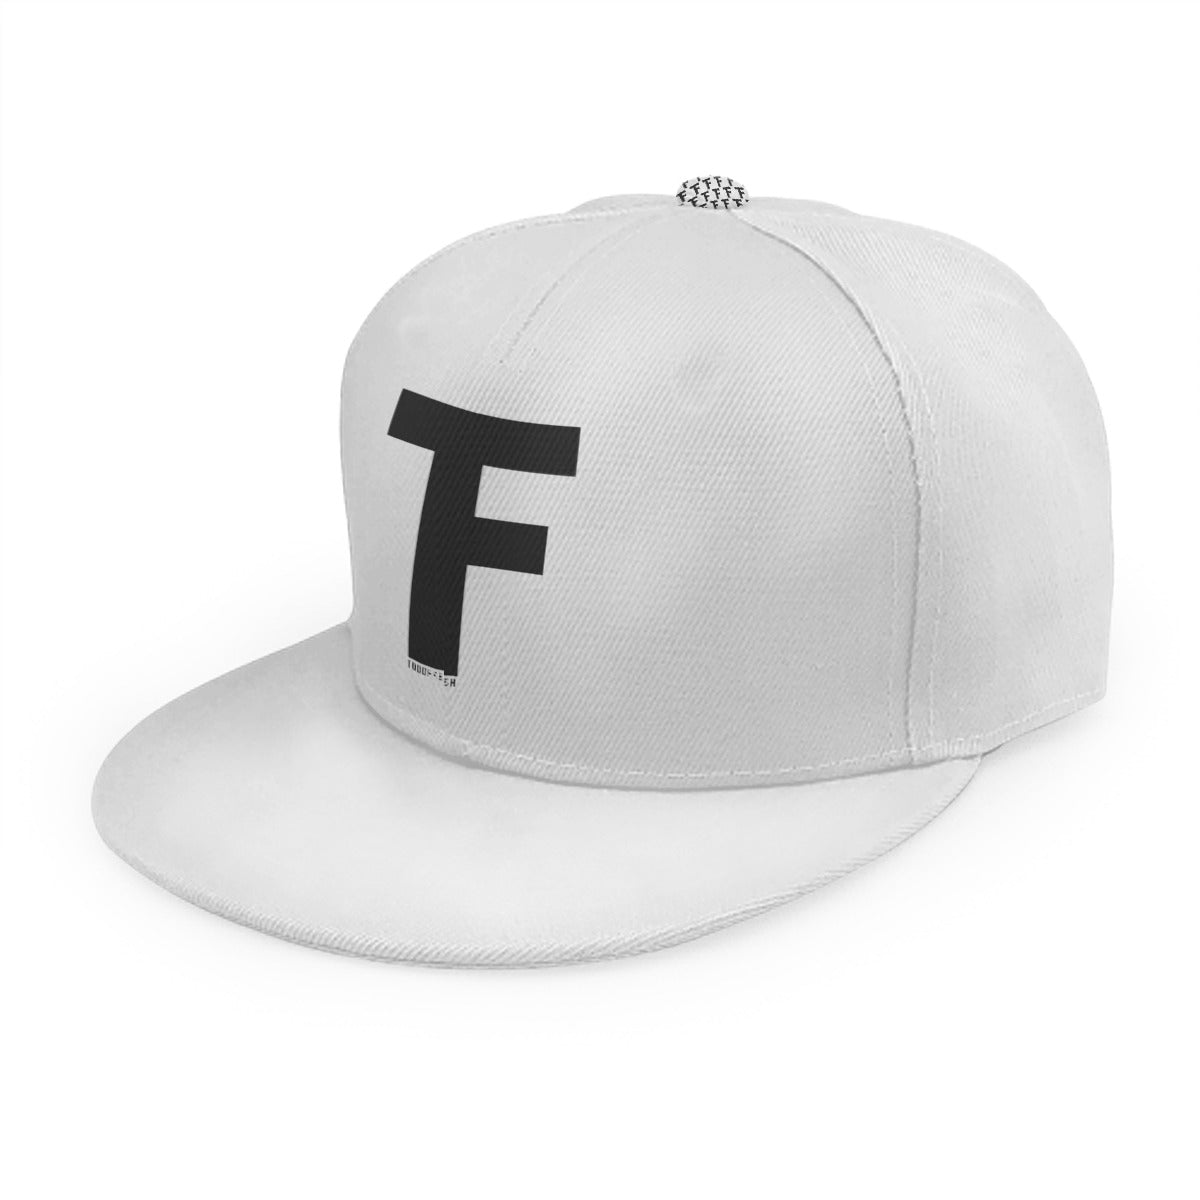 TF Cap With Flat Brim